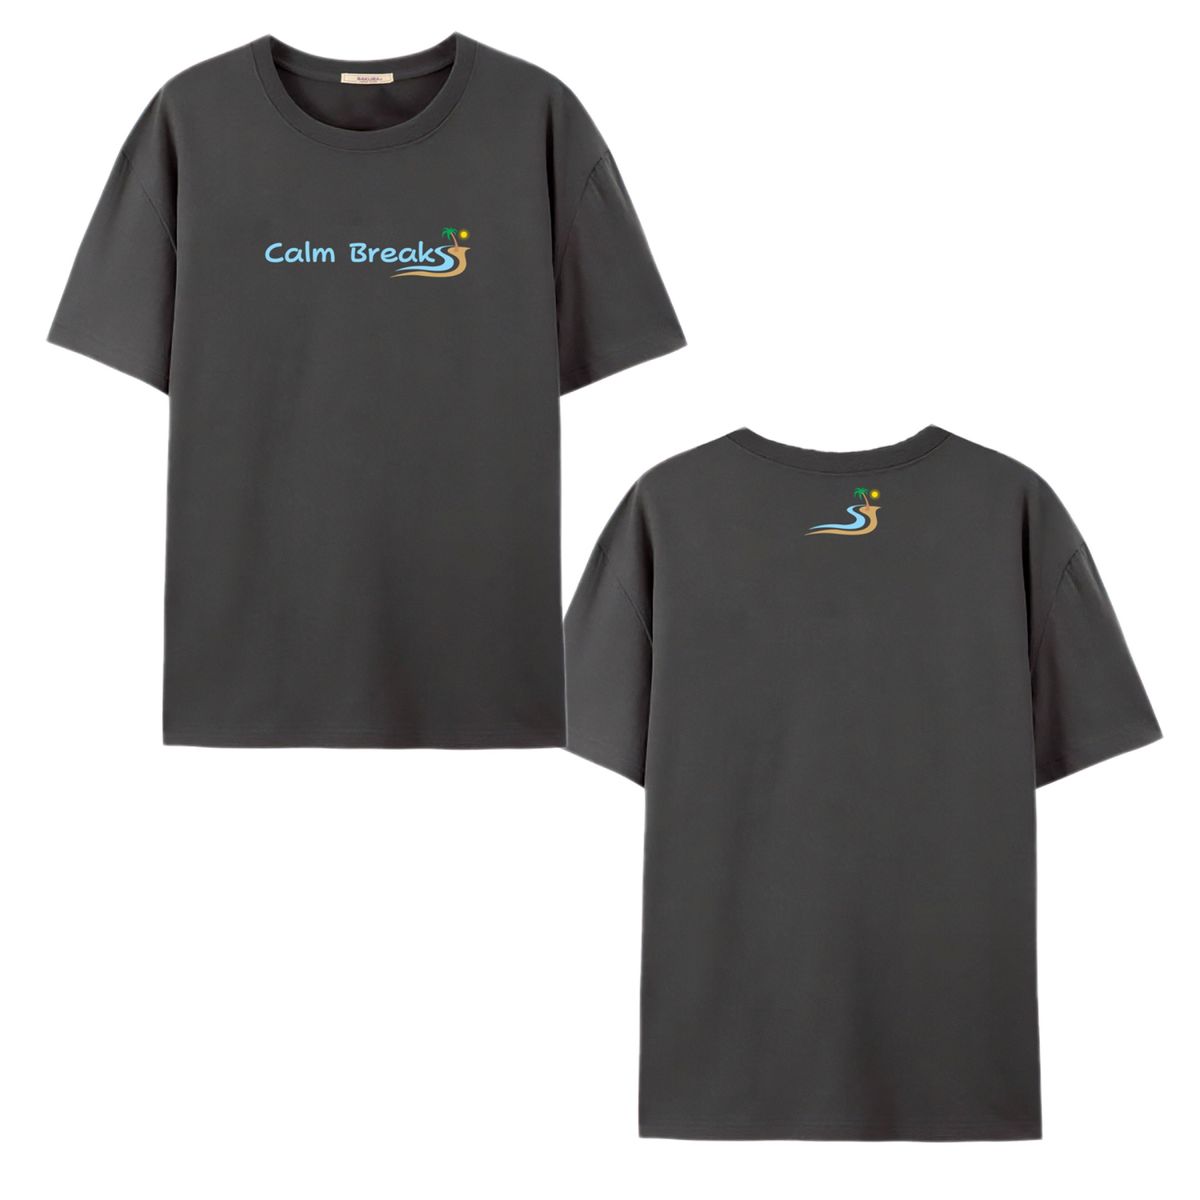 Calm Break ダークグレー ロゴTシャツ - ユニセックス - 100% コットン　M